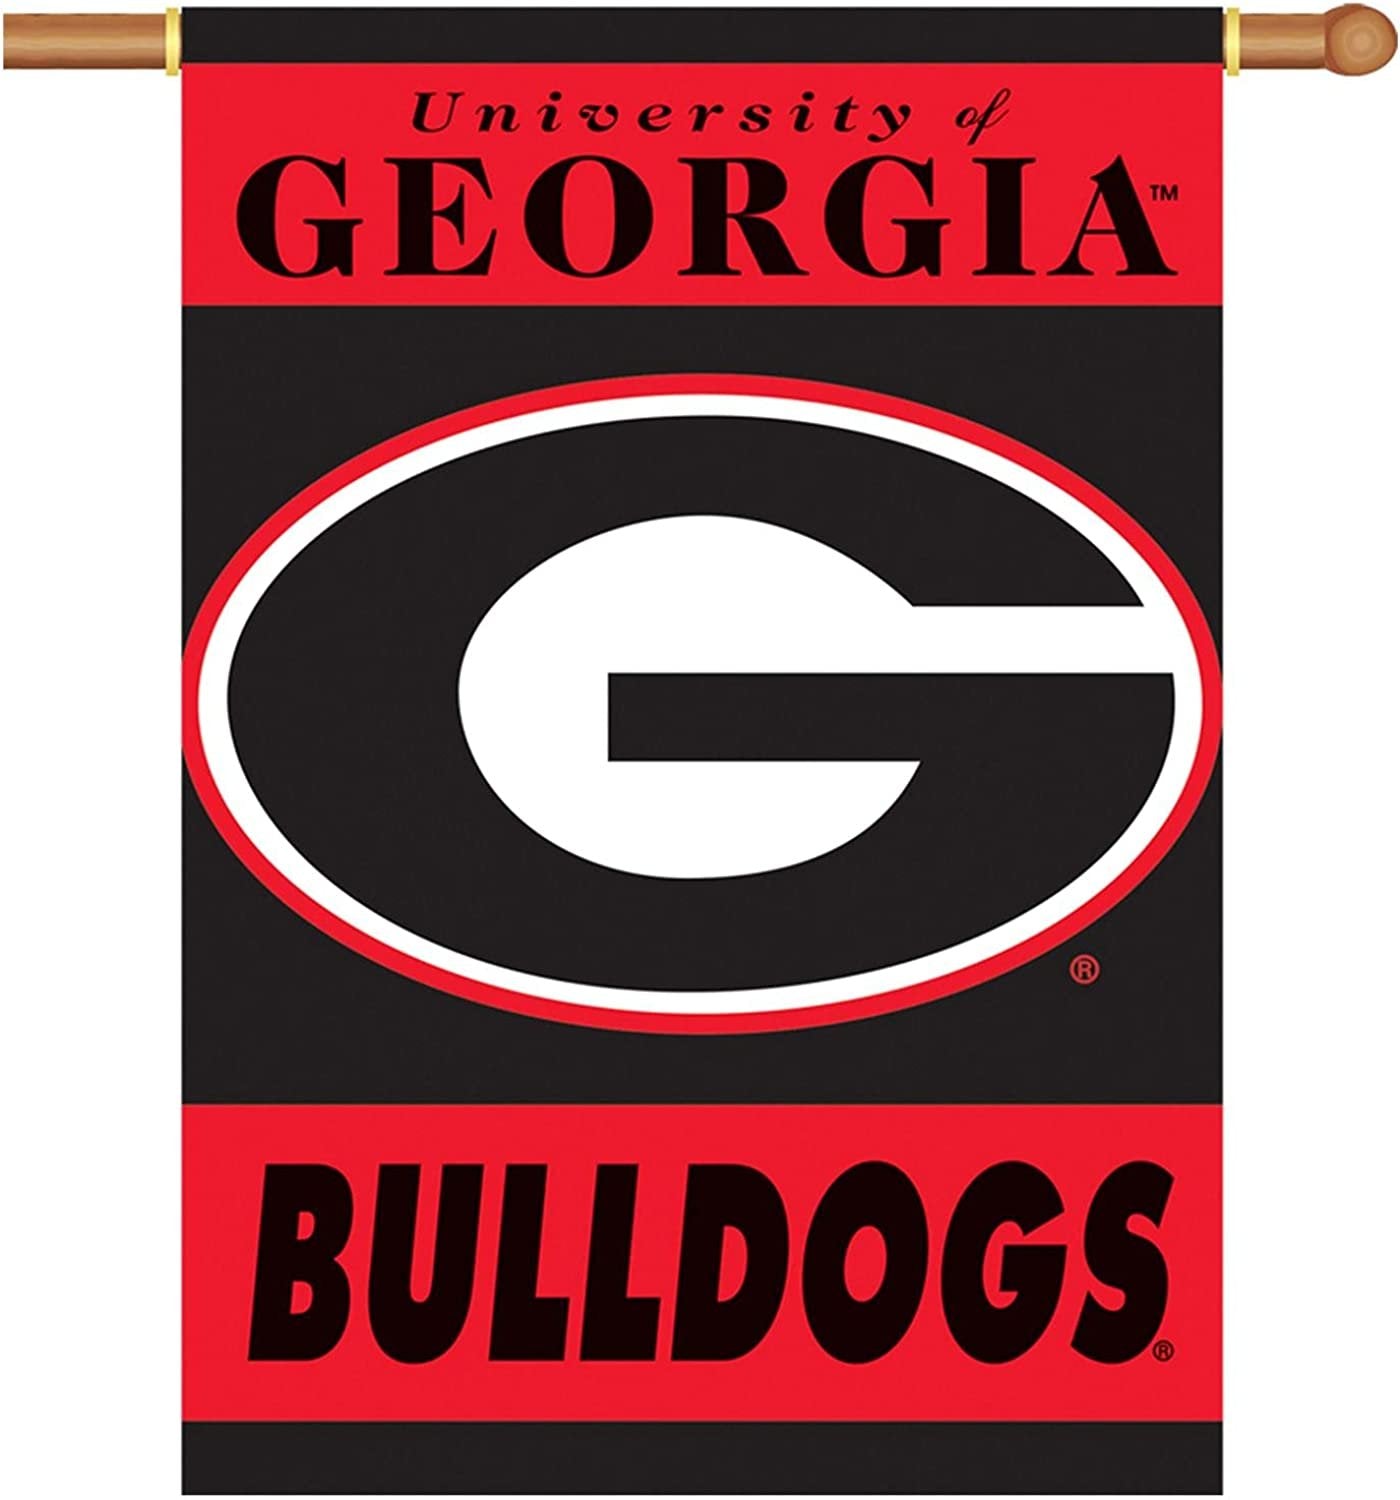 University of Georgia Bulldogs Premium 2-Sided 28x40 Inch Banner Flag with Pole Sleeve G Logo